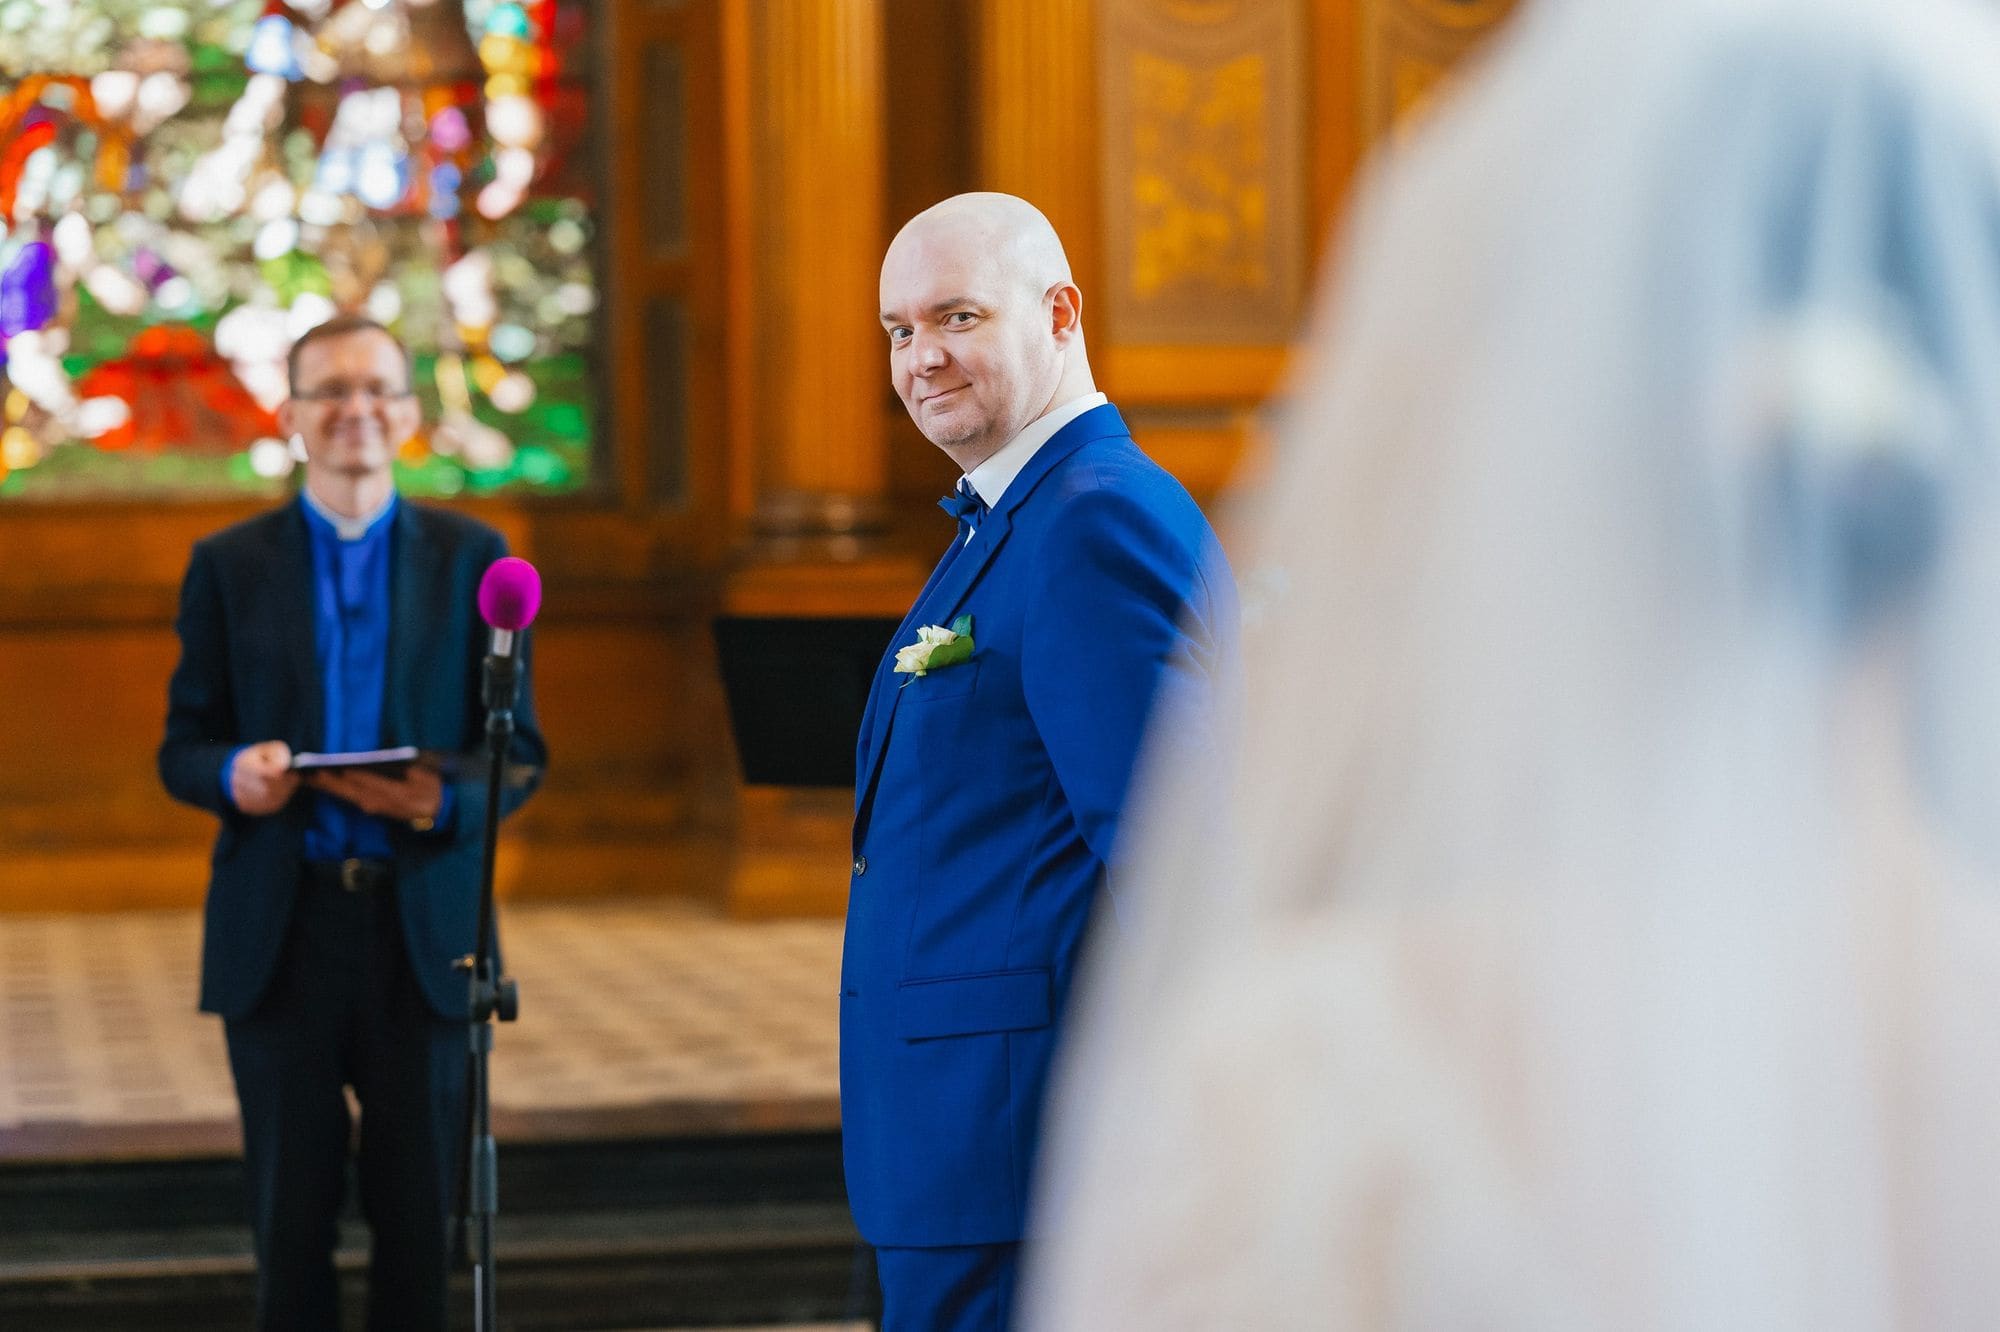 Mariko's Church Wedding: Getting Married During COVID